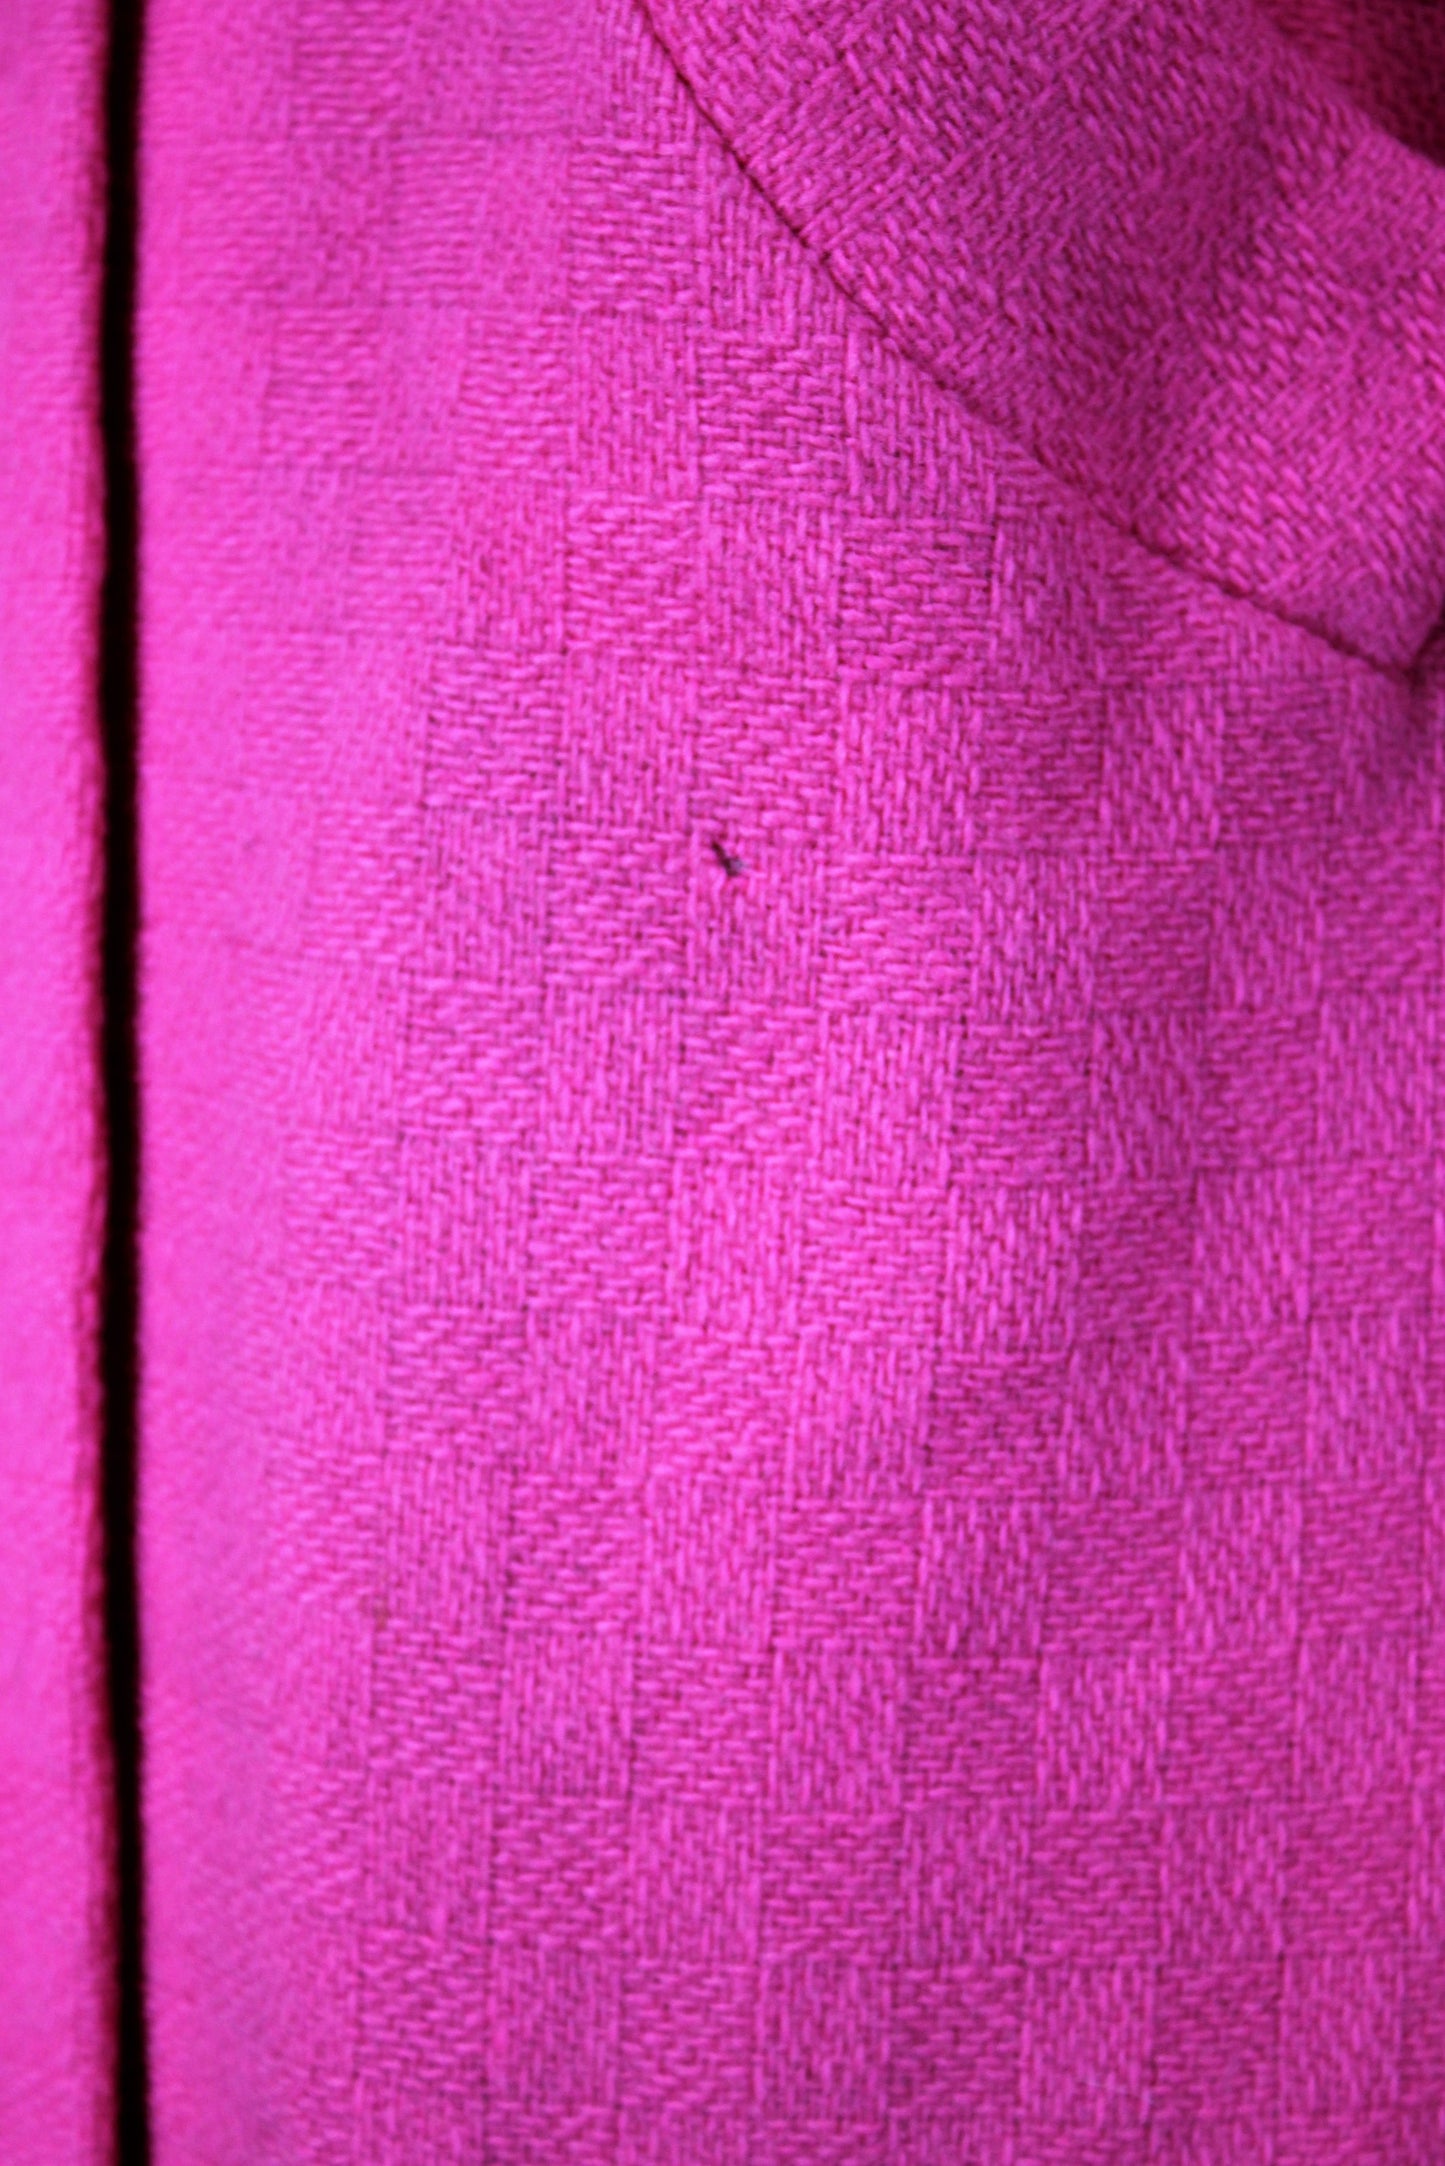 The Vintage 1960s Elle Overcoat in Pink – Toadstool Farm Vintage